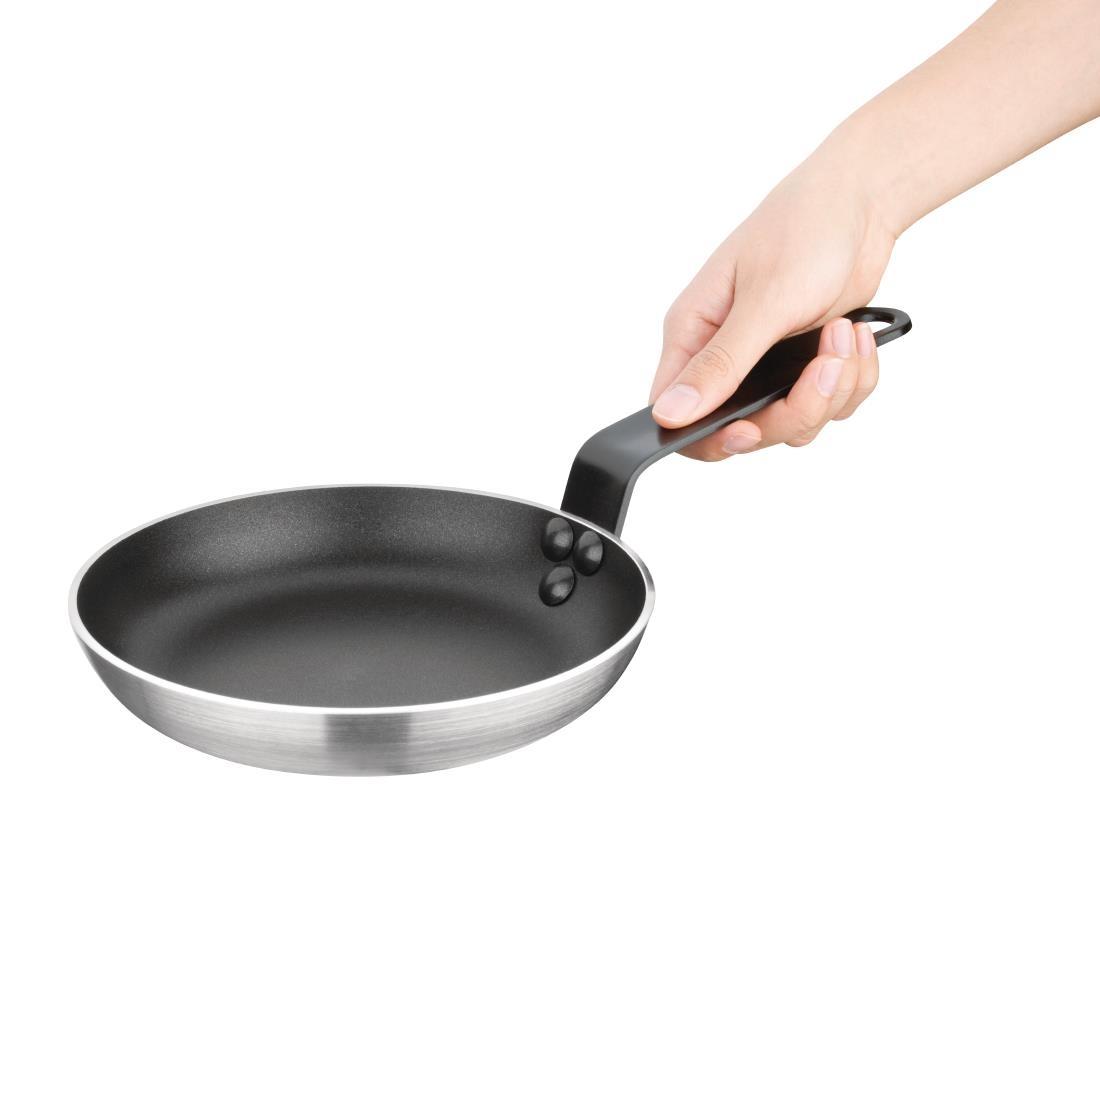 Nisbets Essentials Non-Stick Teflon Frying Pan 200mm - DG164  - 5